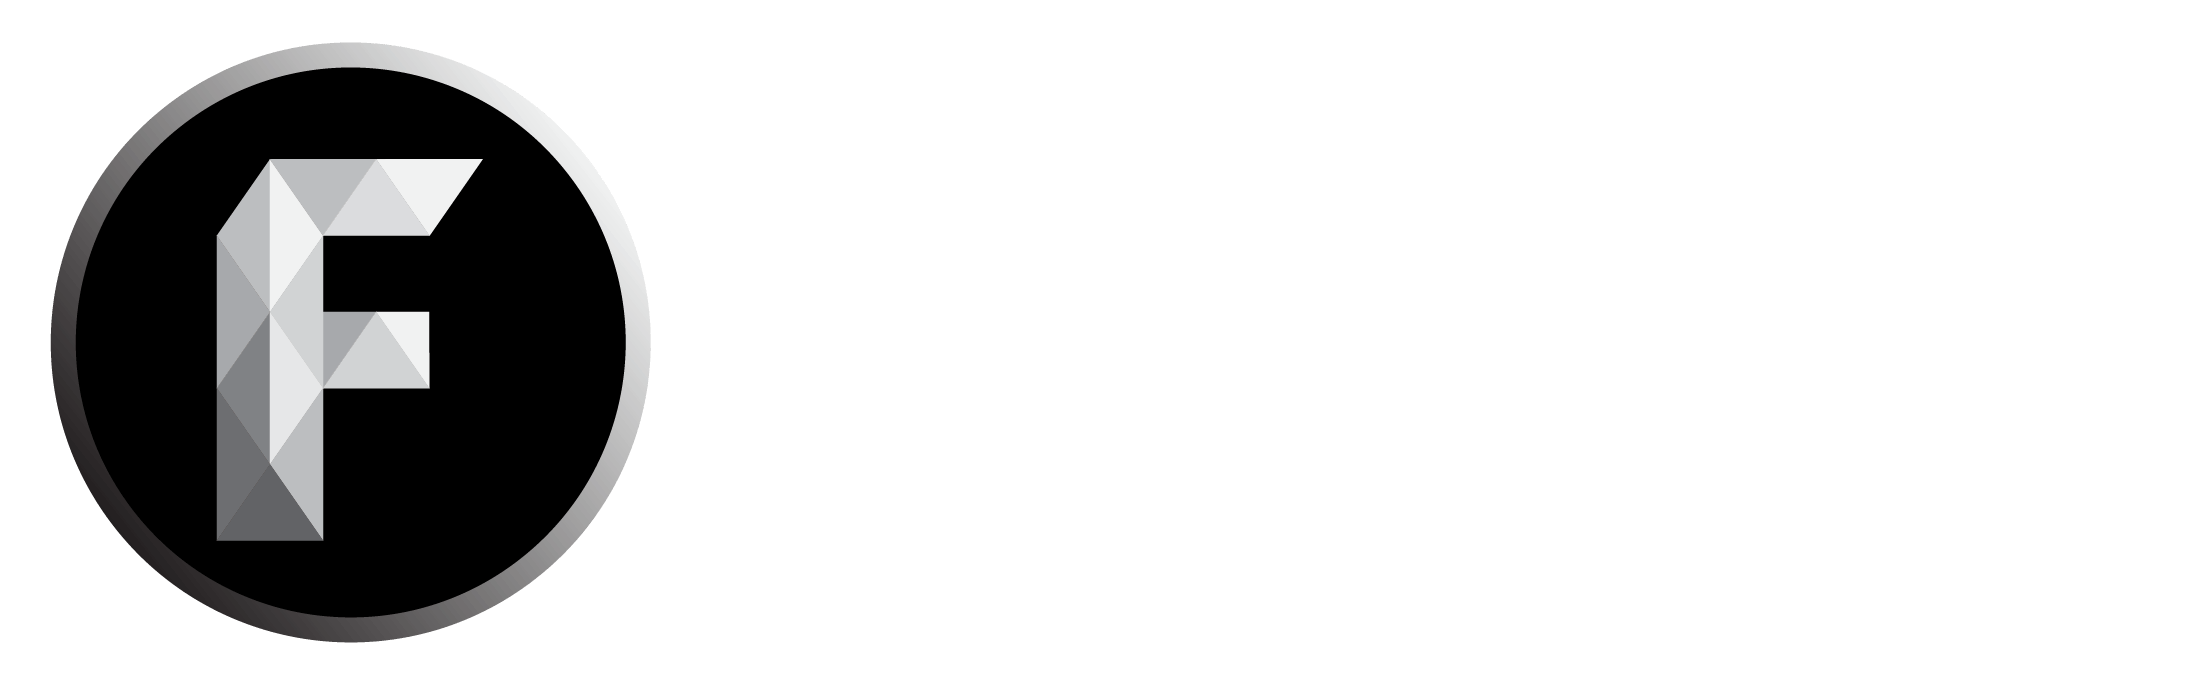 freedom network logo